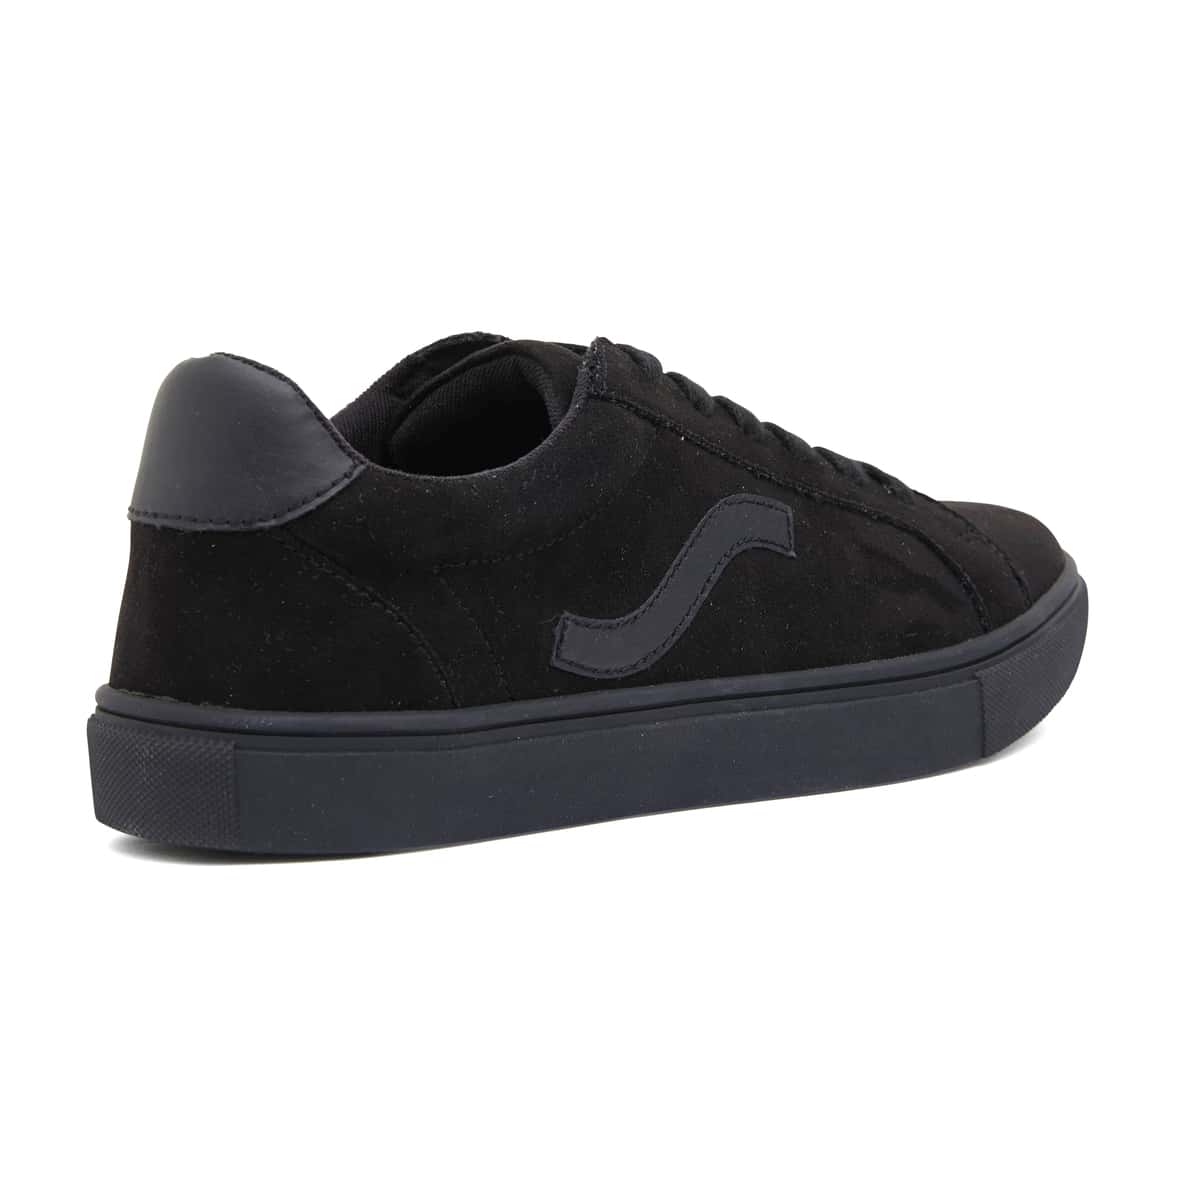 Swerve Sneaker in Black Suede